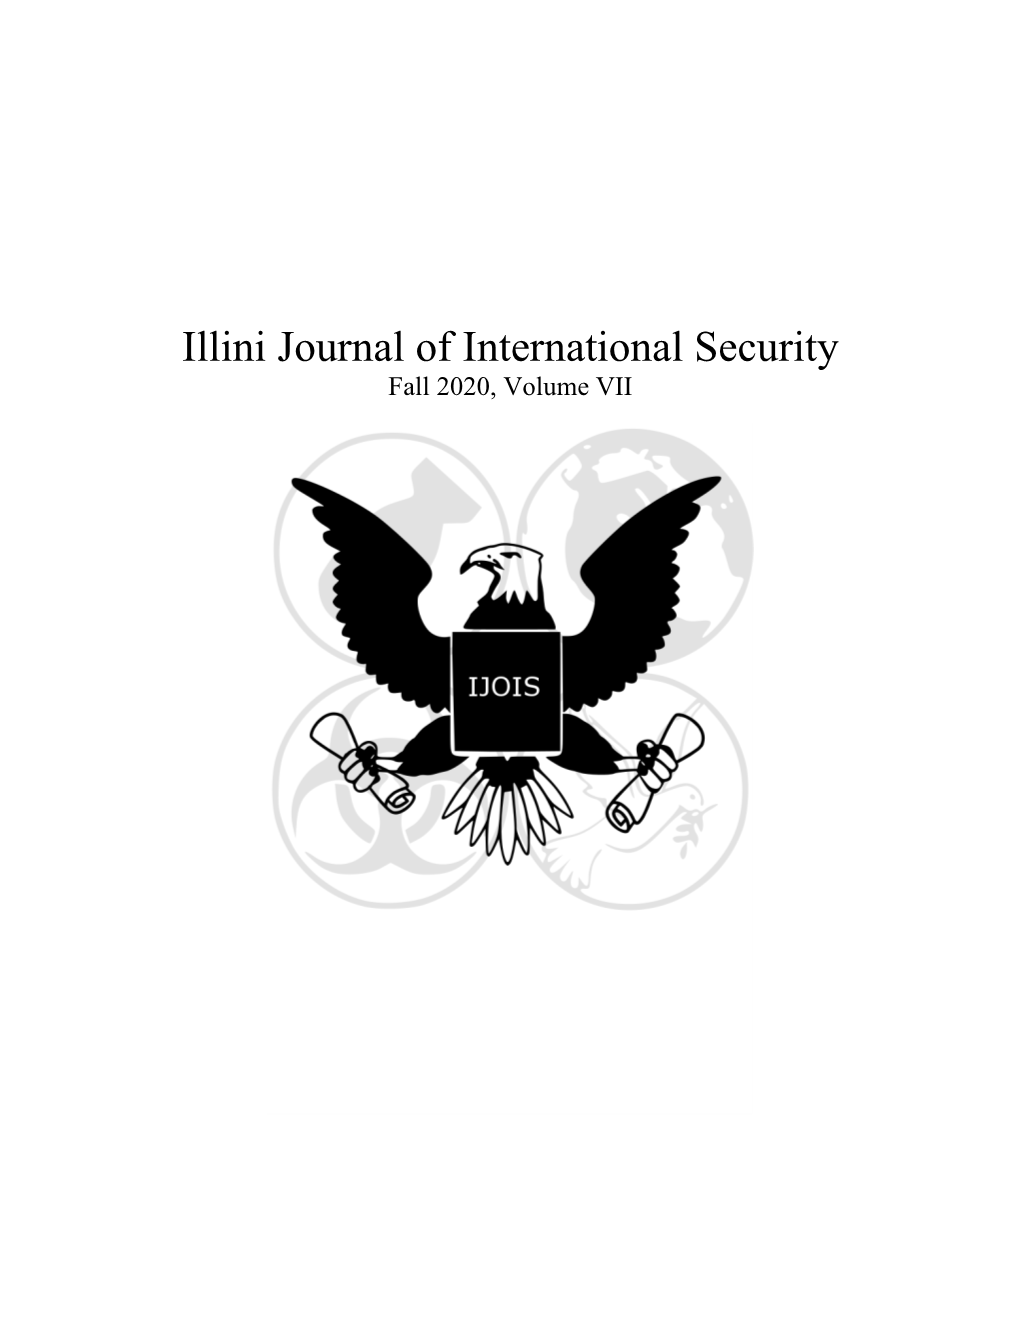 Illini Journal of International Security Fall 2020, Volume VII